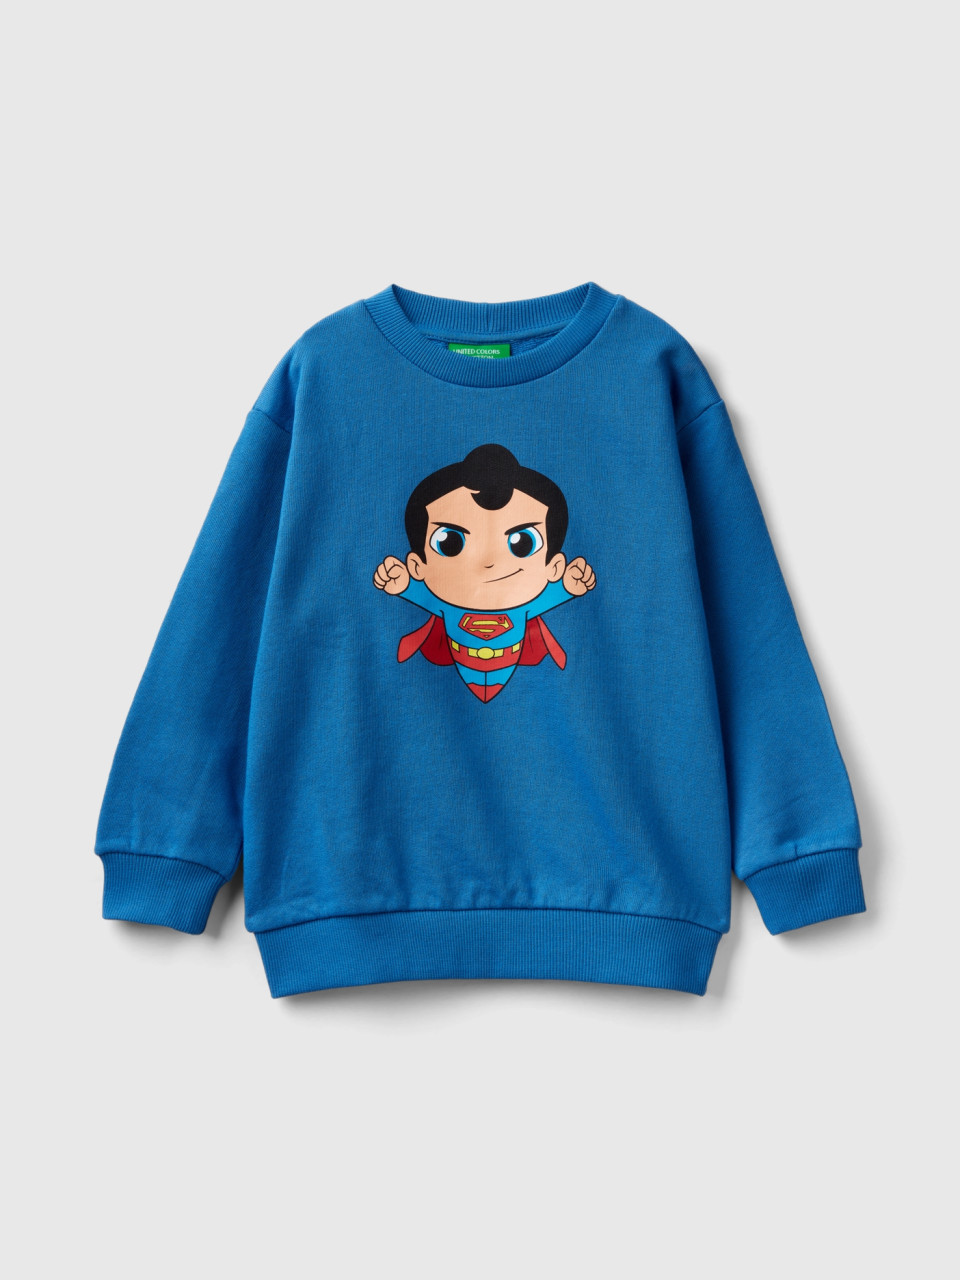 Benetton, Air Force Blue Superman ©&™ Dc Comics Sweatshirt, Air Force Blue, Kids